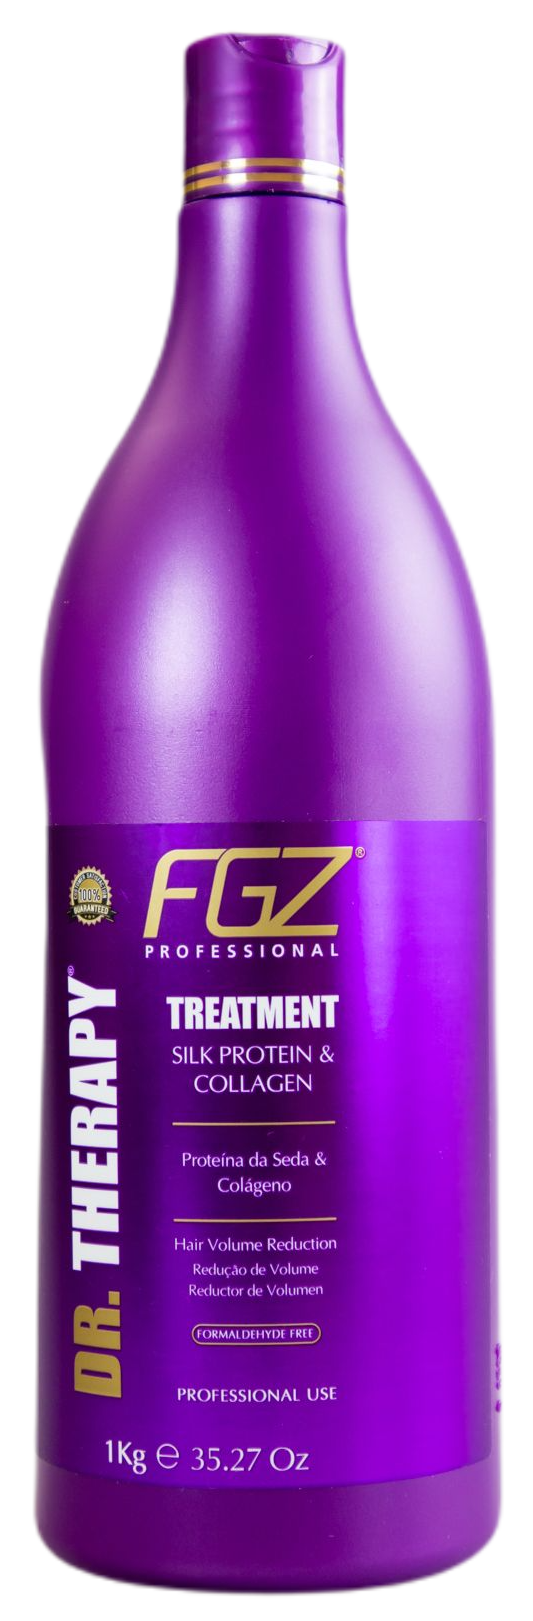 Fogazza Cosmetics Brazilian Keratin Treatment Enzyme Therapy Dr. Therapy 1L - Fogazza Cosmetics